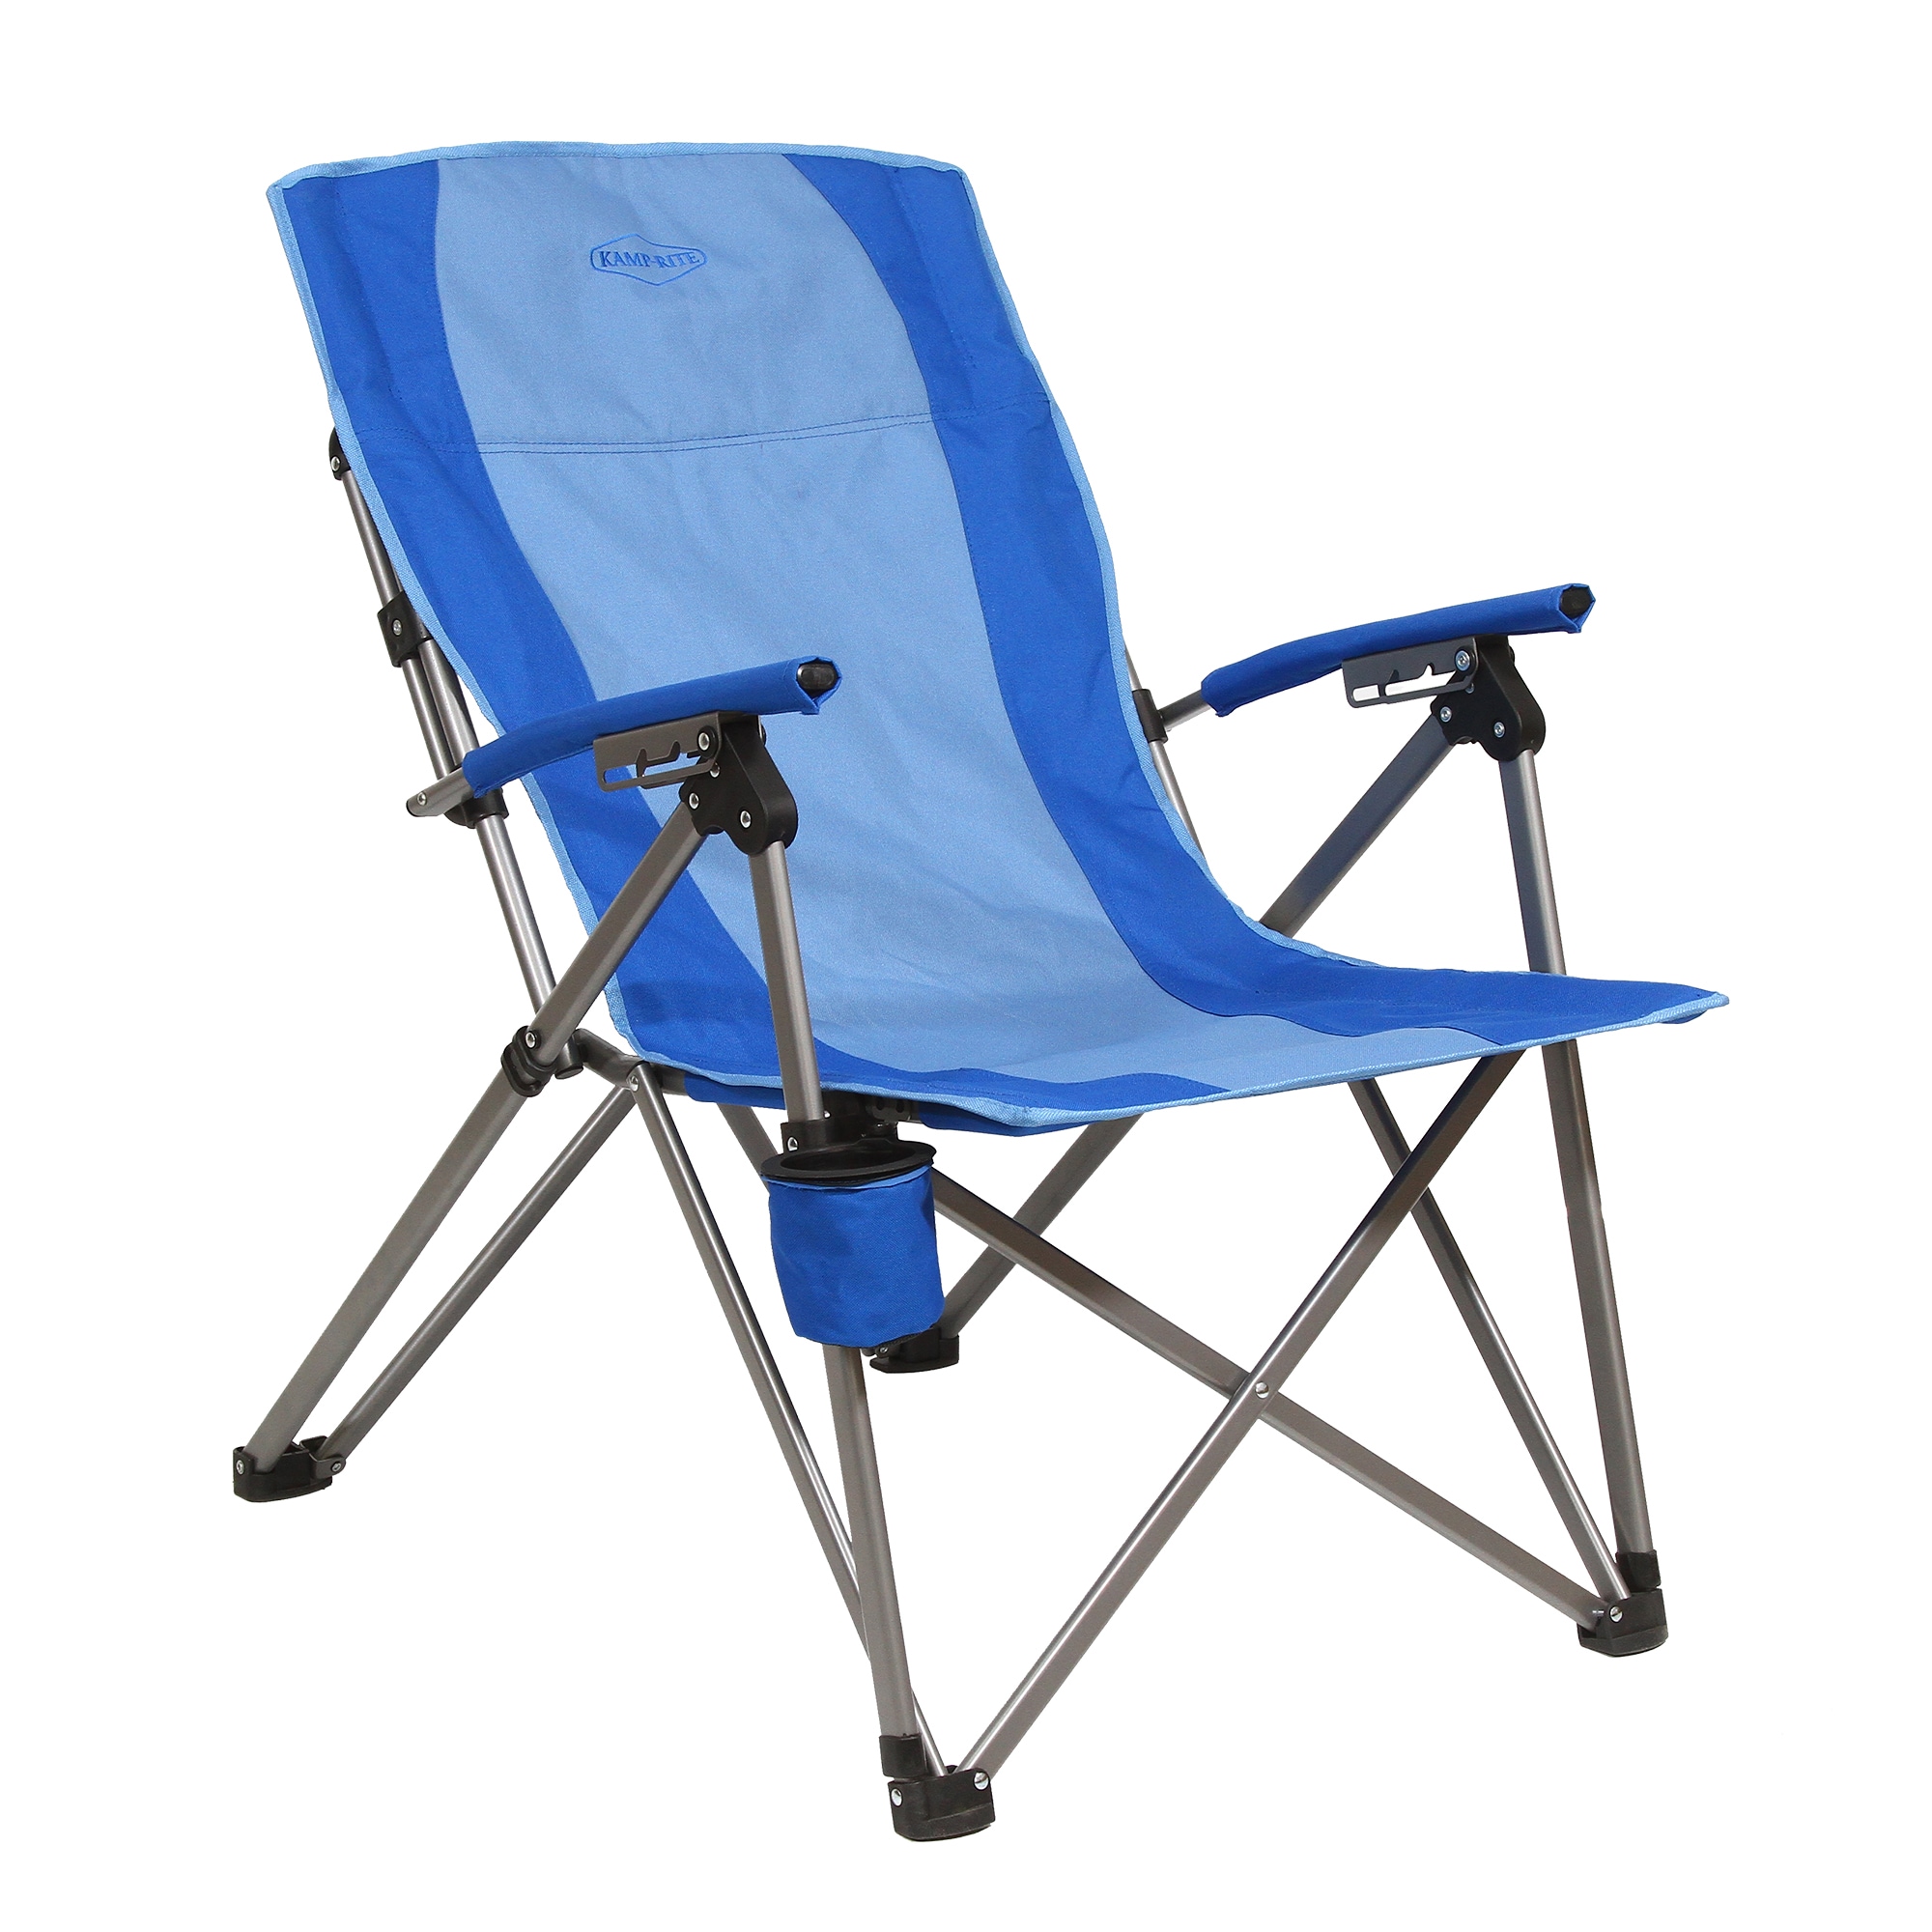 NCAA Washington Huskies Reclining Camp Chair Sports Chair with Carry Bag Beach Chair for Adults 